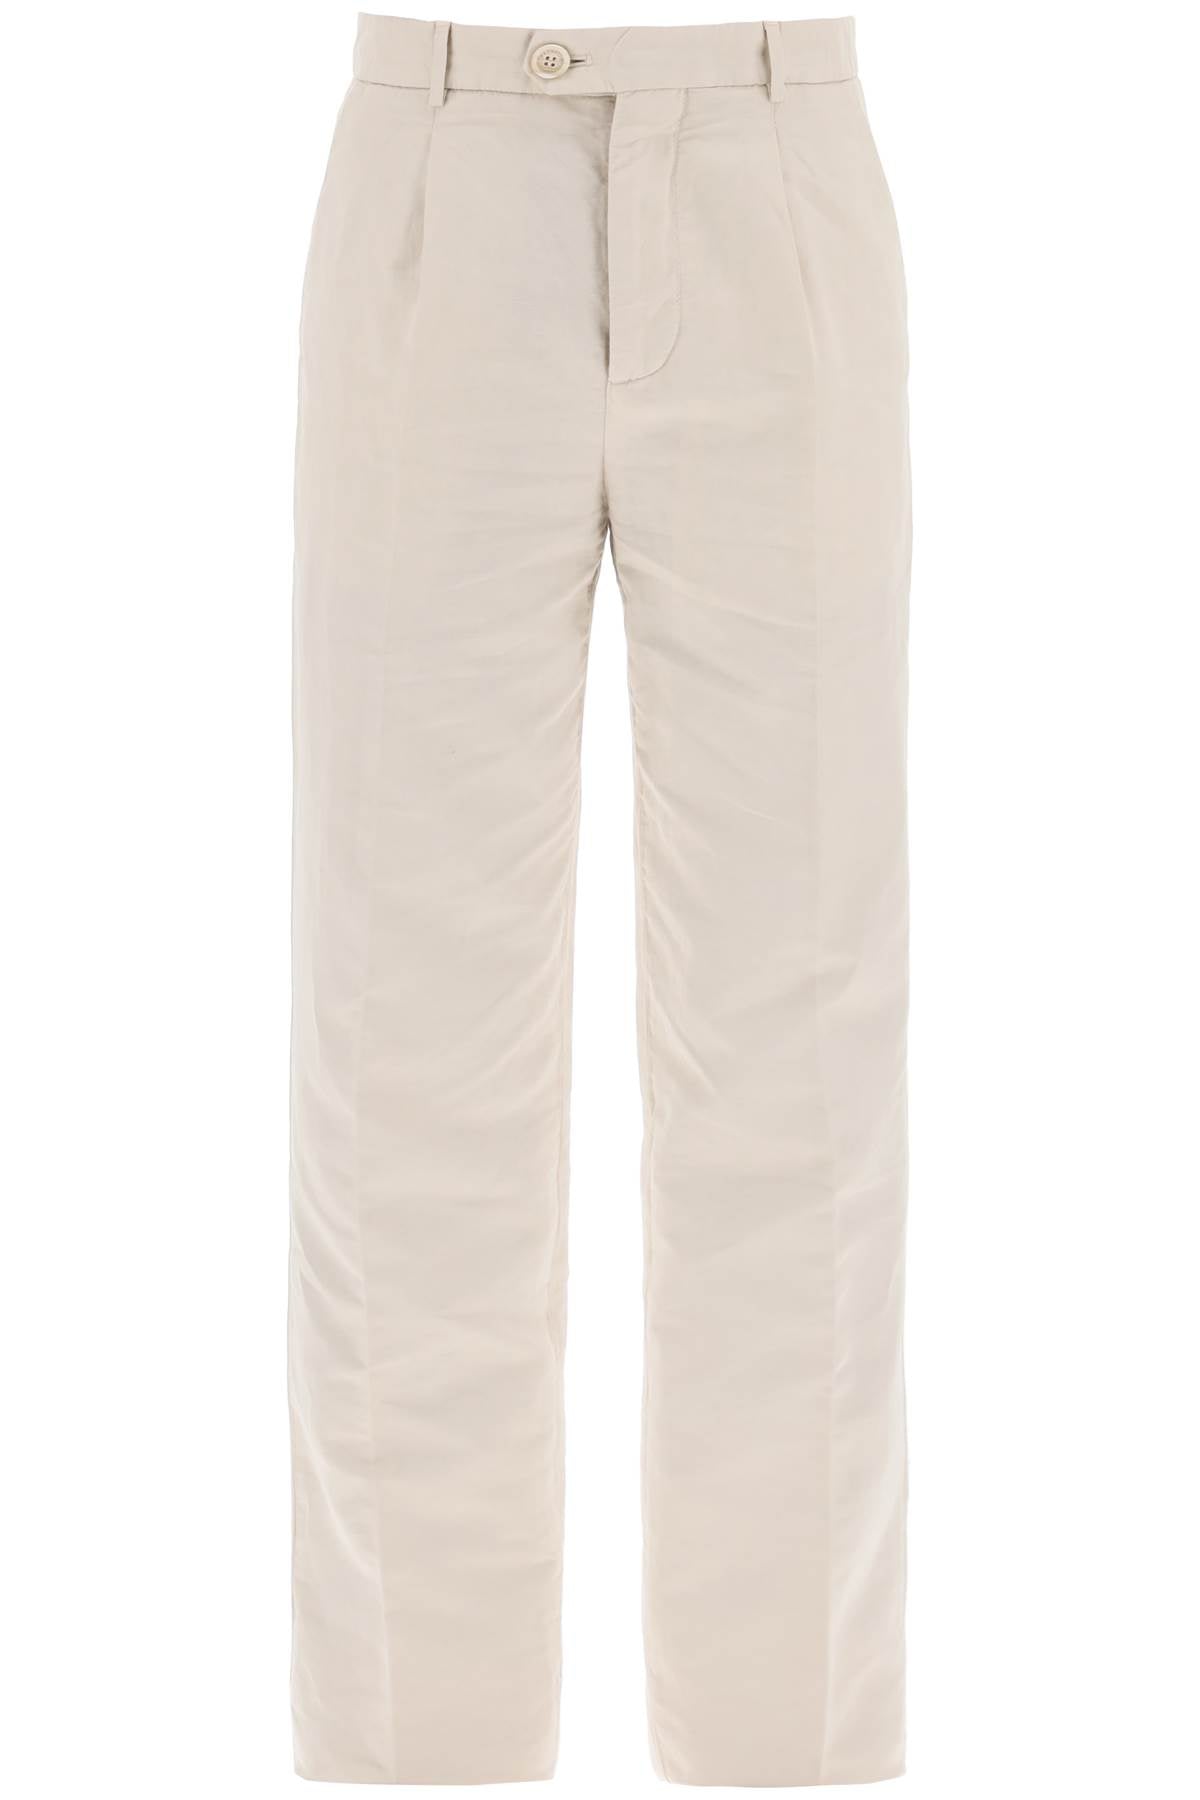 cotton and linen gabardine pants-0